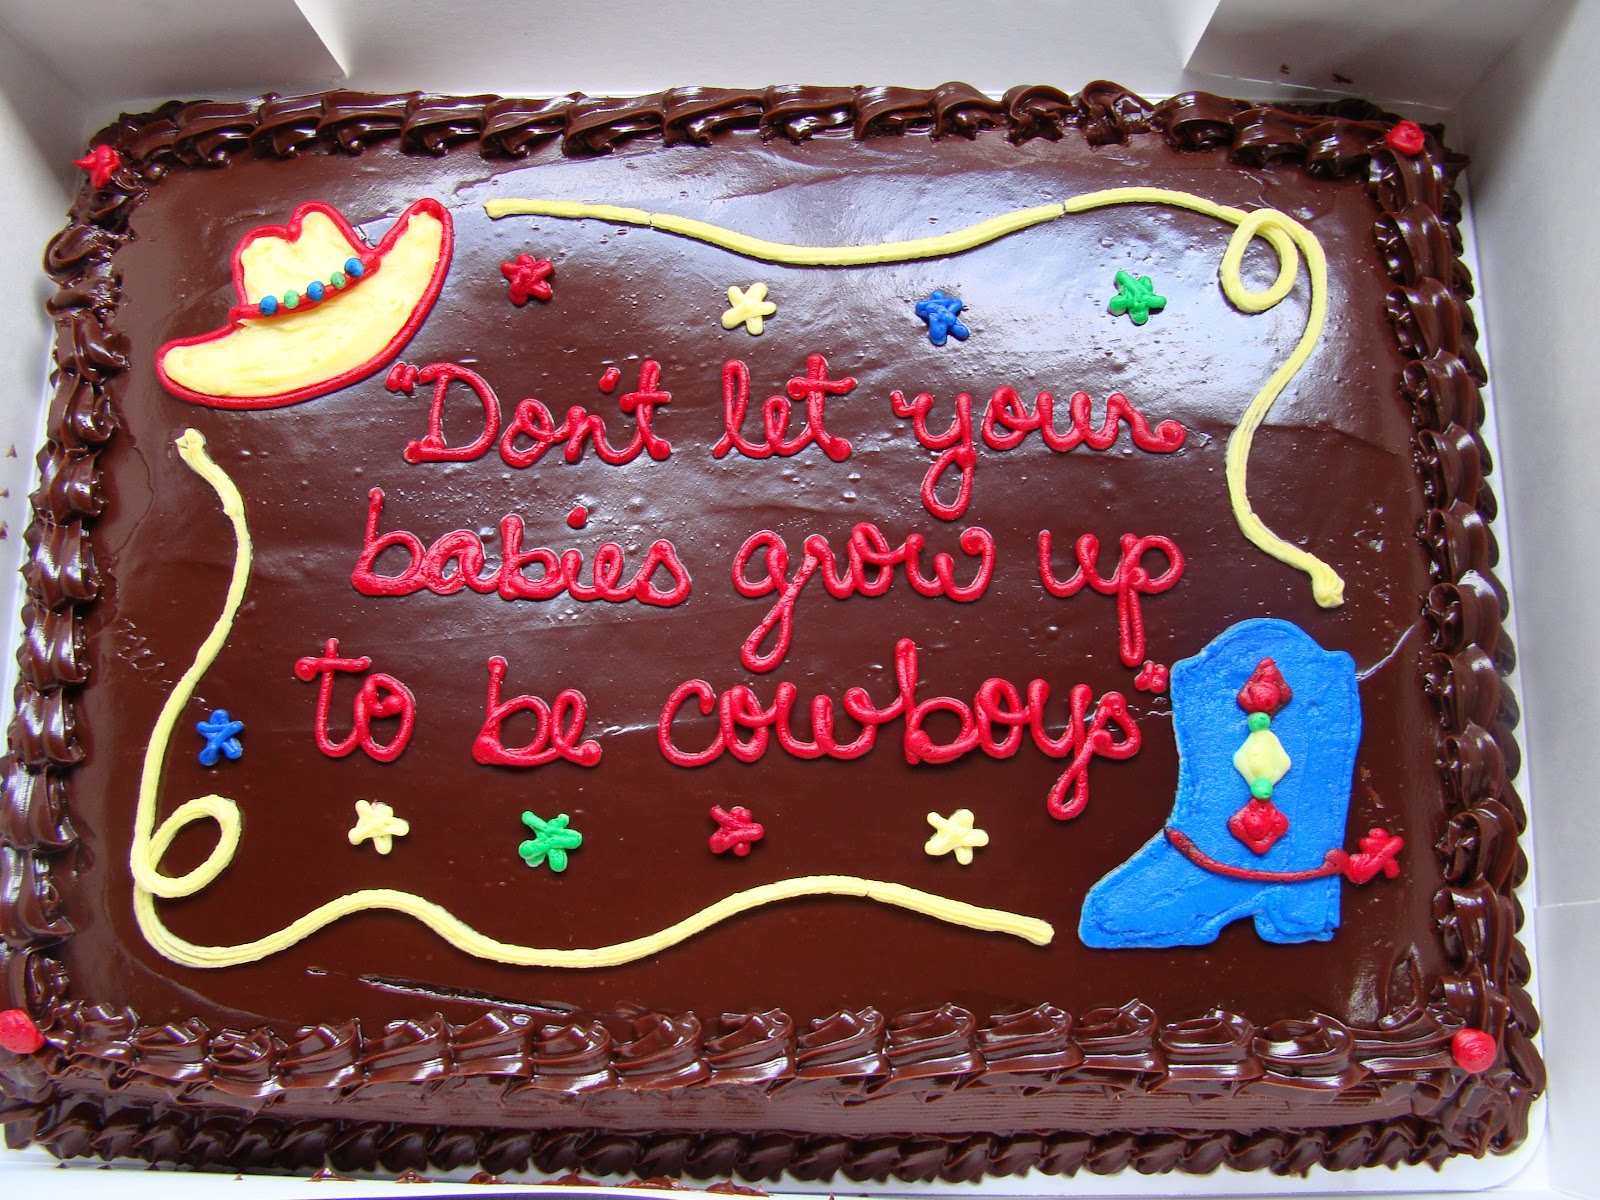 cowboy cakes for birthdays